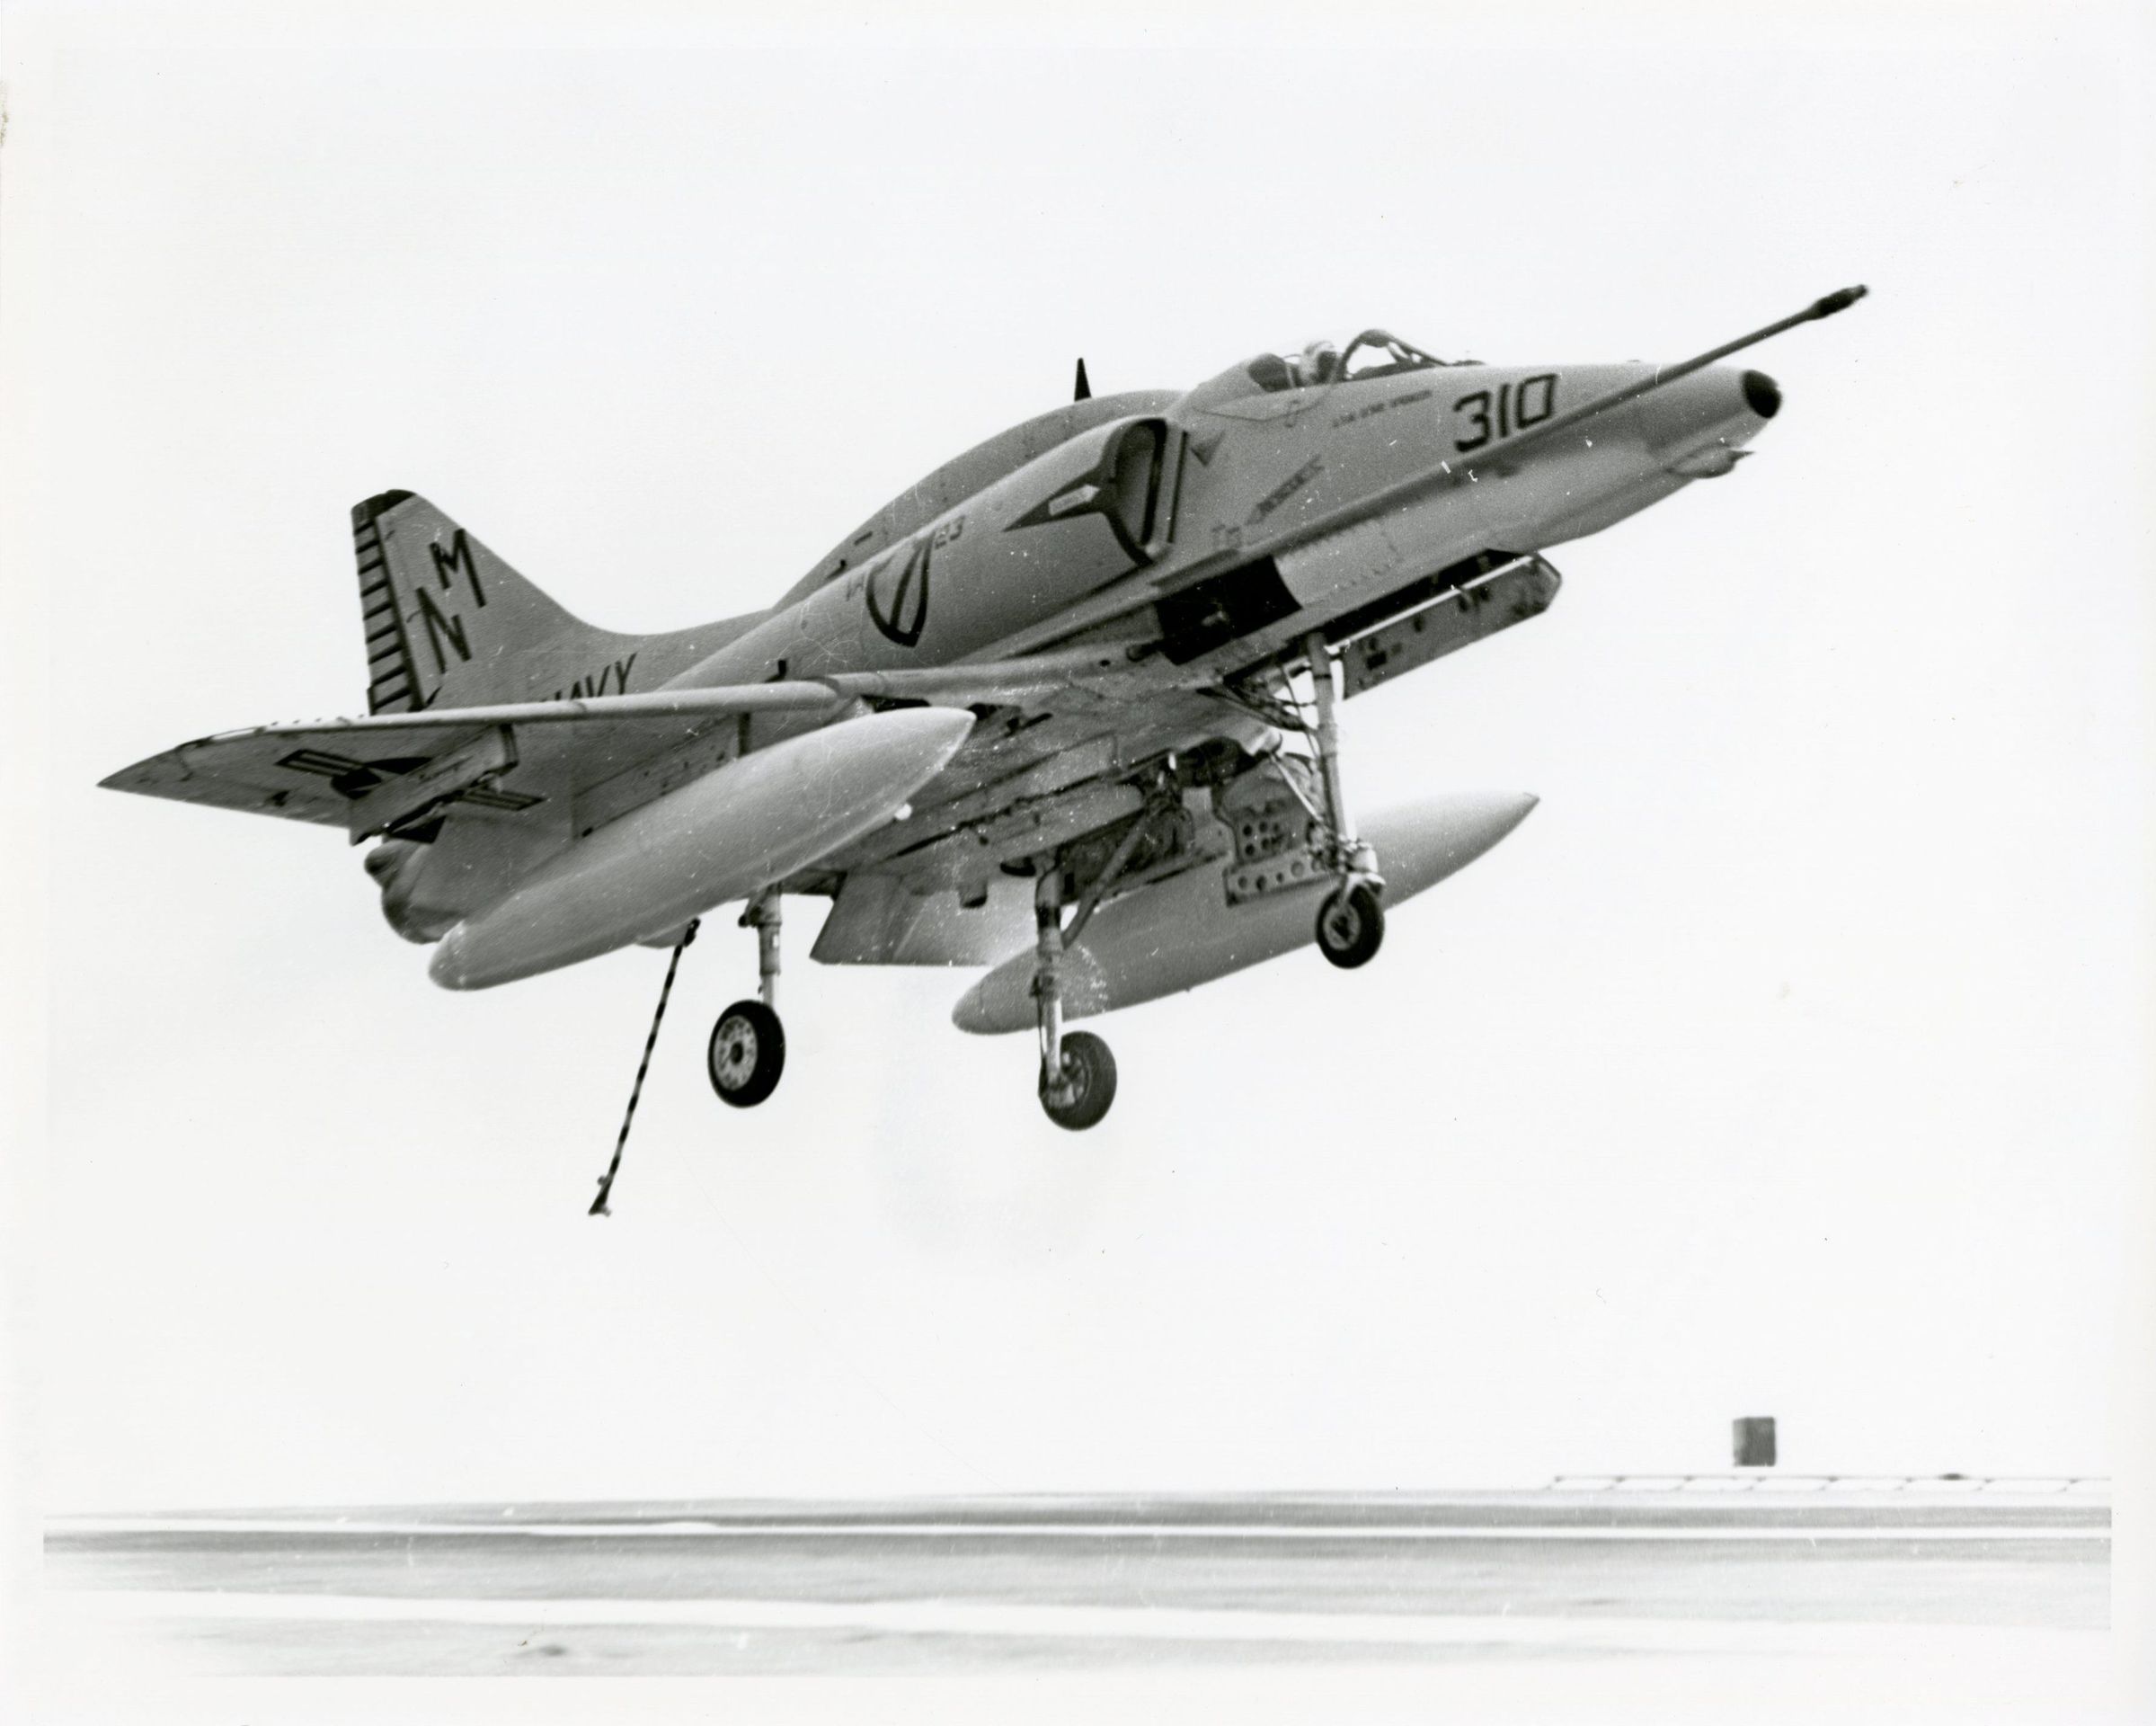 Primary Image of A-4 Skyhawk Landing on The USS Yorktown (CVS-10)